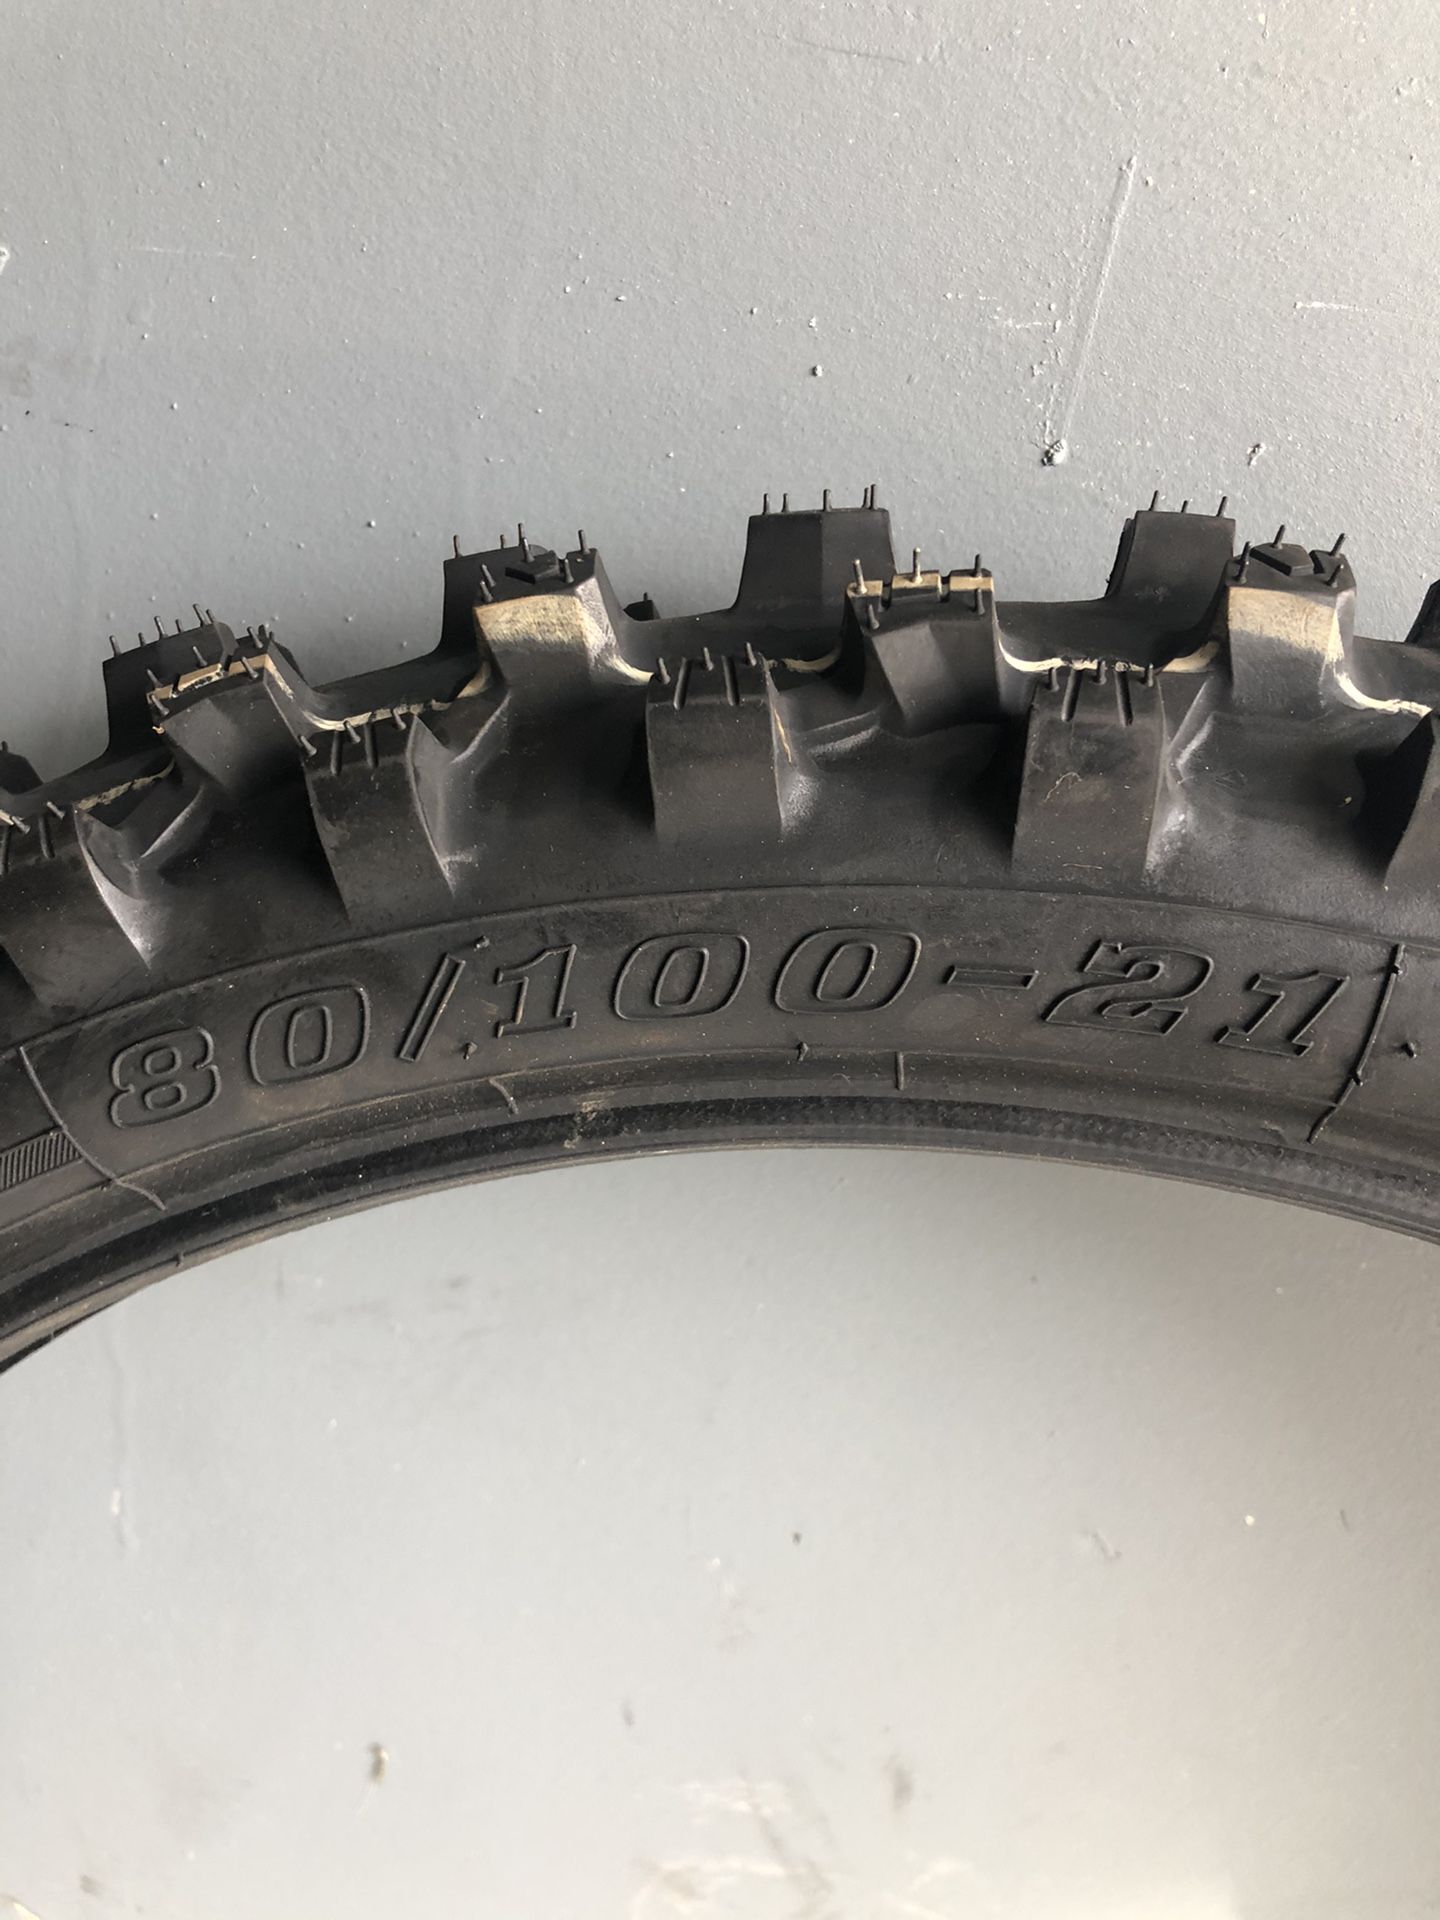 Brand new dirt bike tires